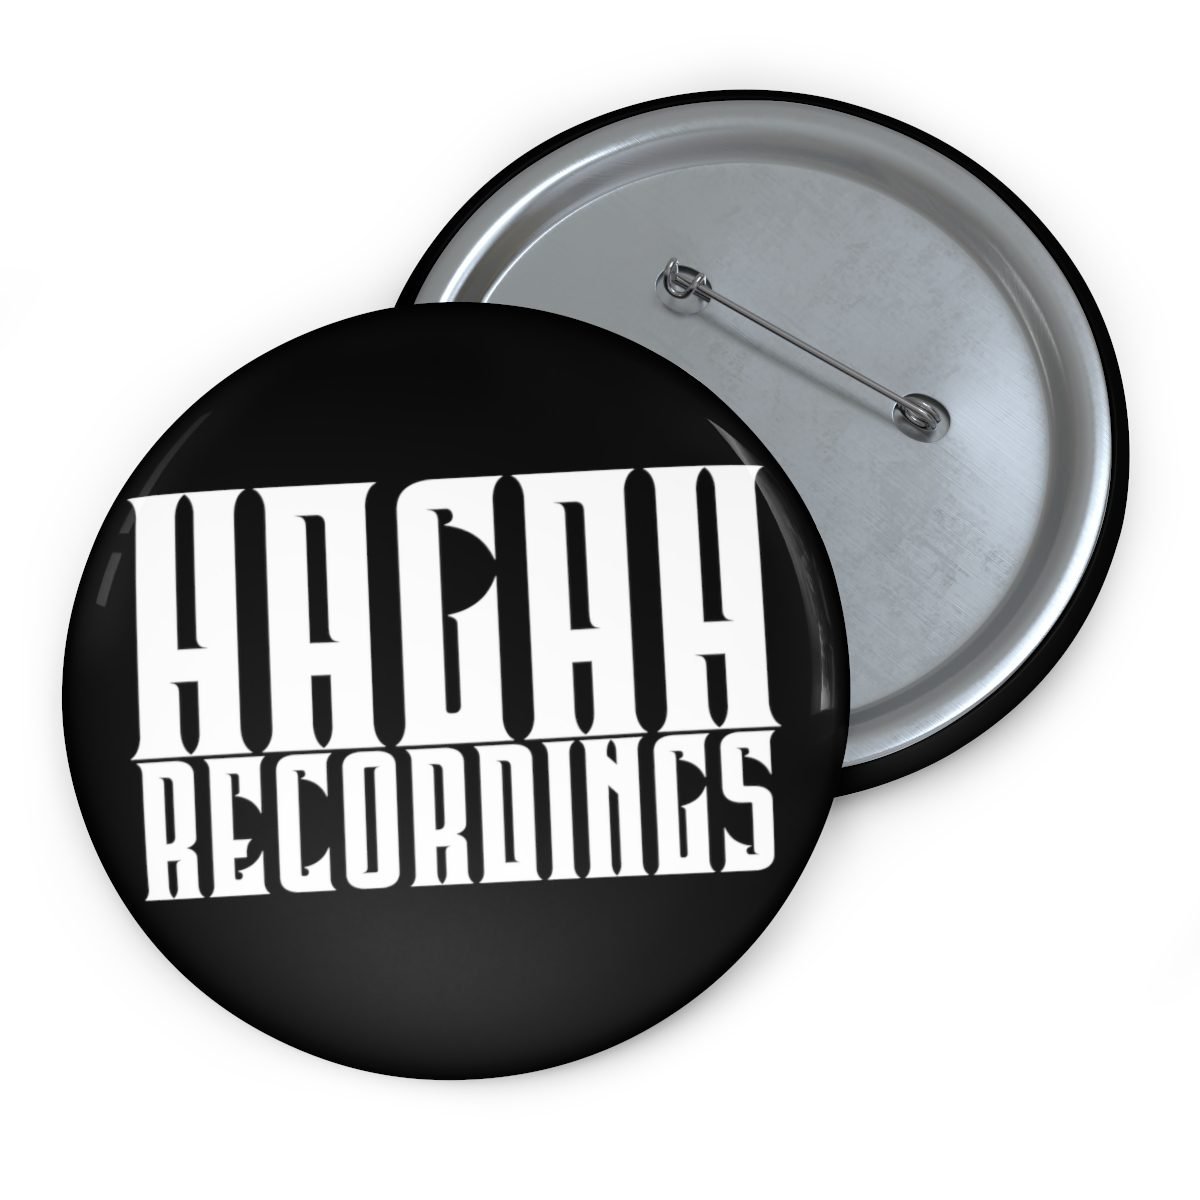 Hagah Recordings Logo Pin Buttons